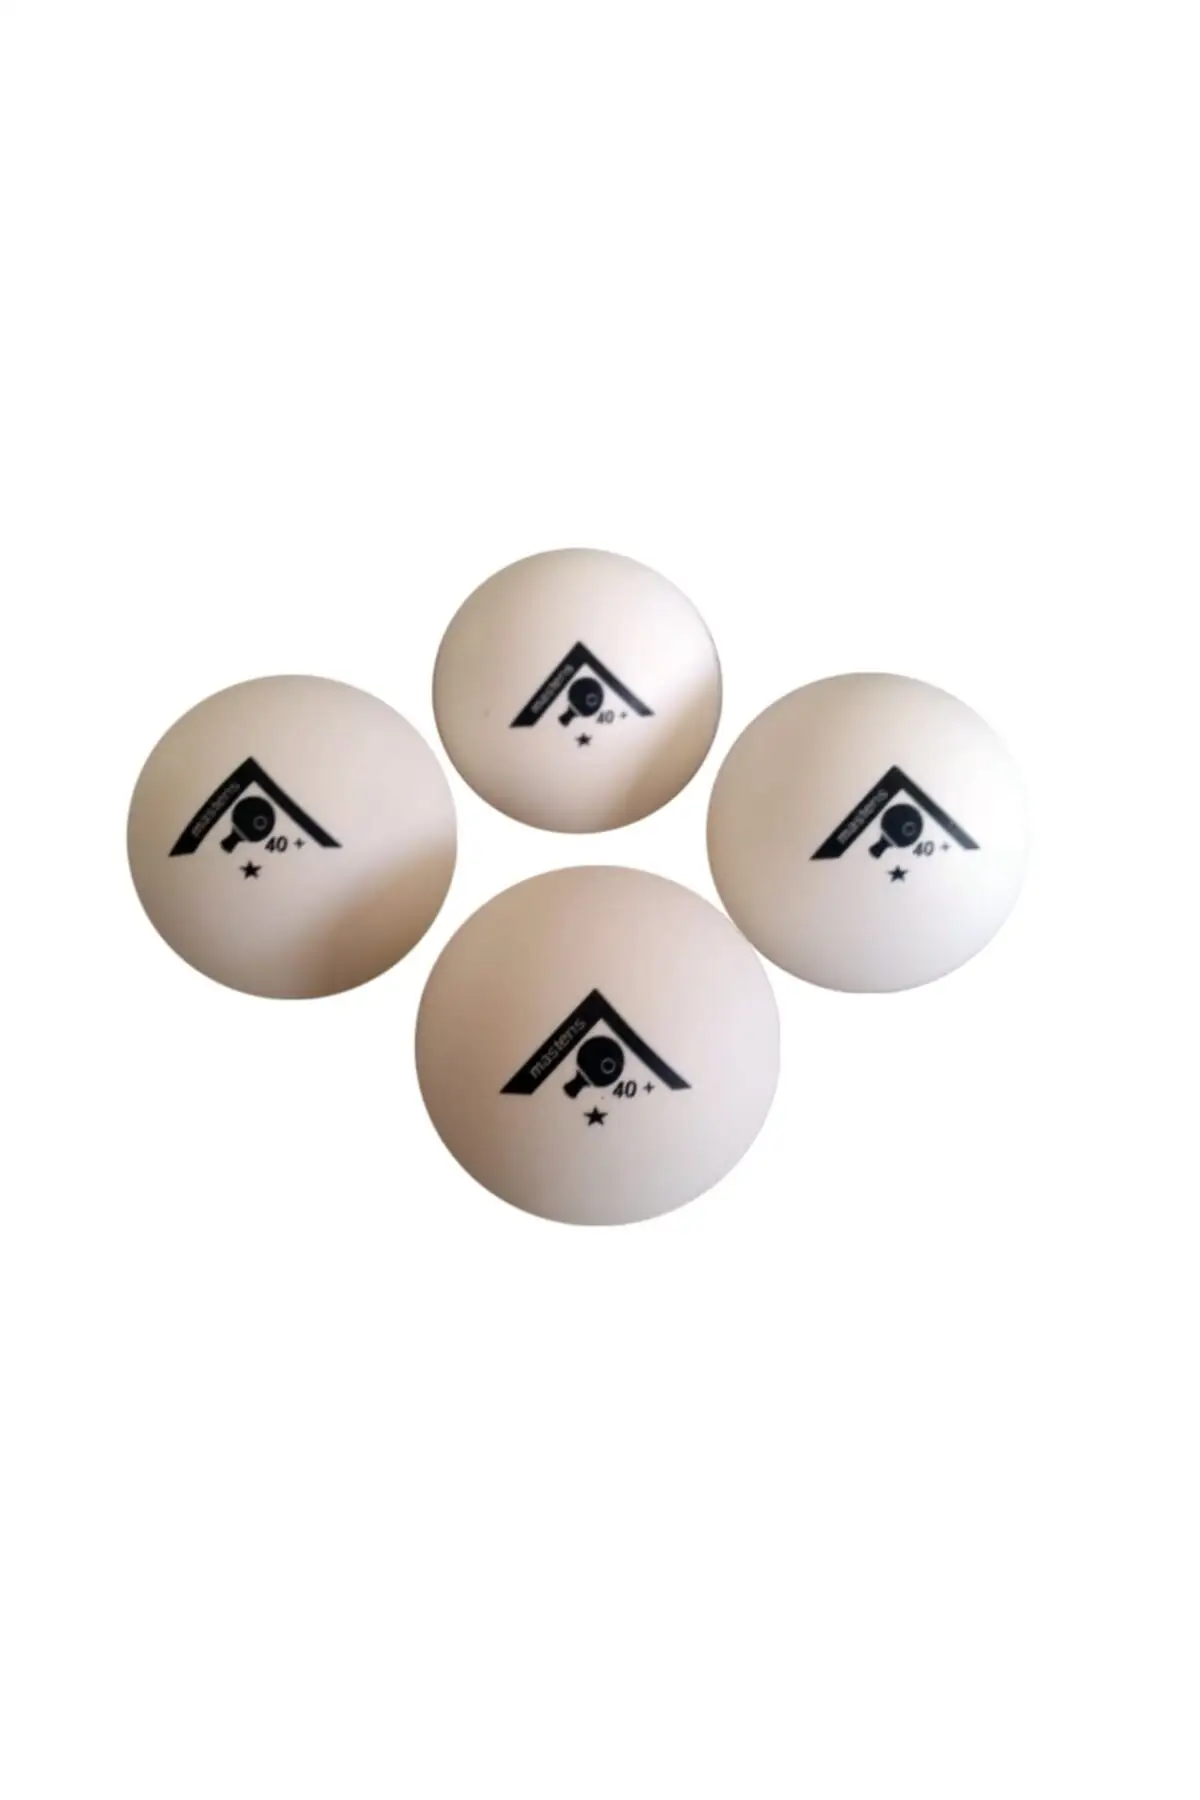 White Single Star Table Tennis Ball 72 Li Tennis Equipment & Accessory Outdoor